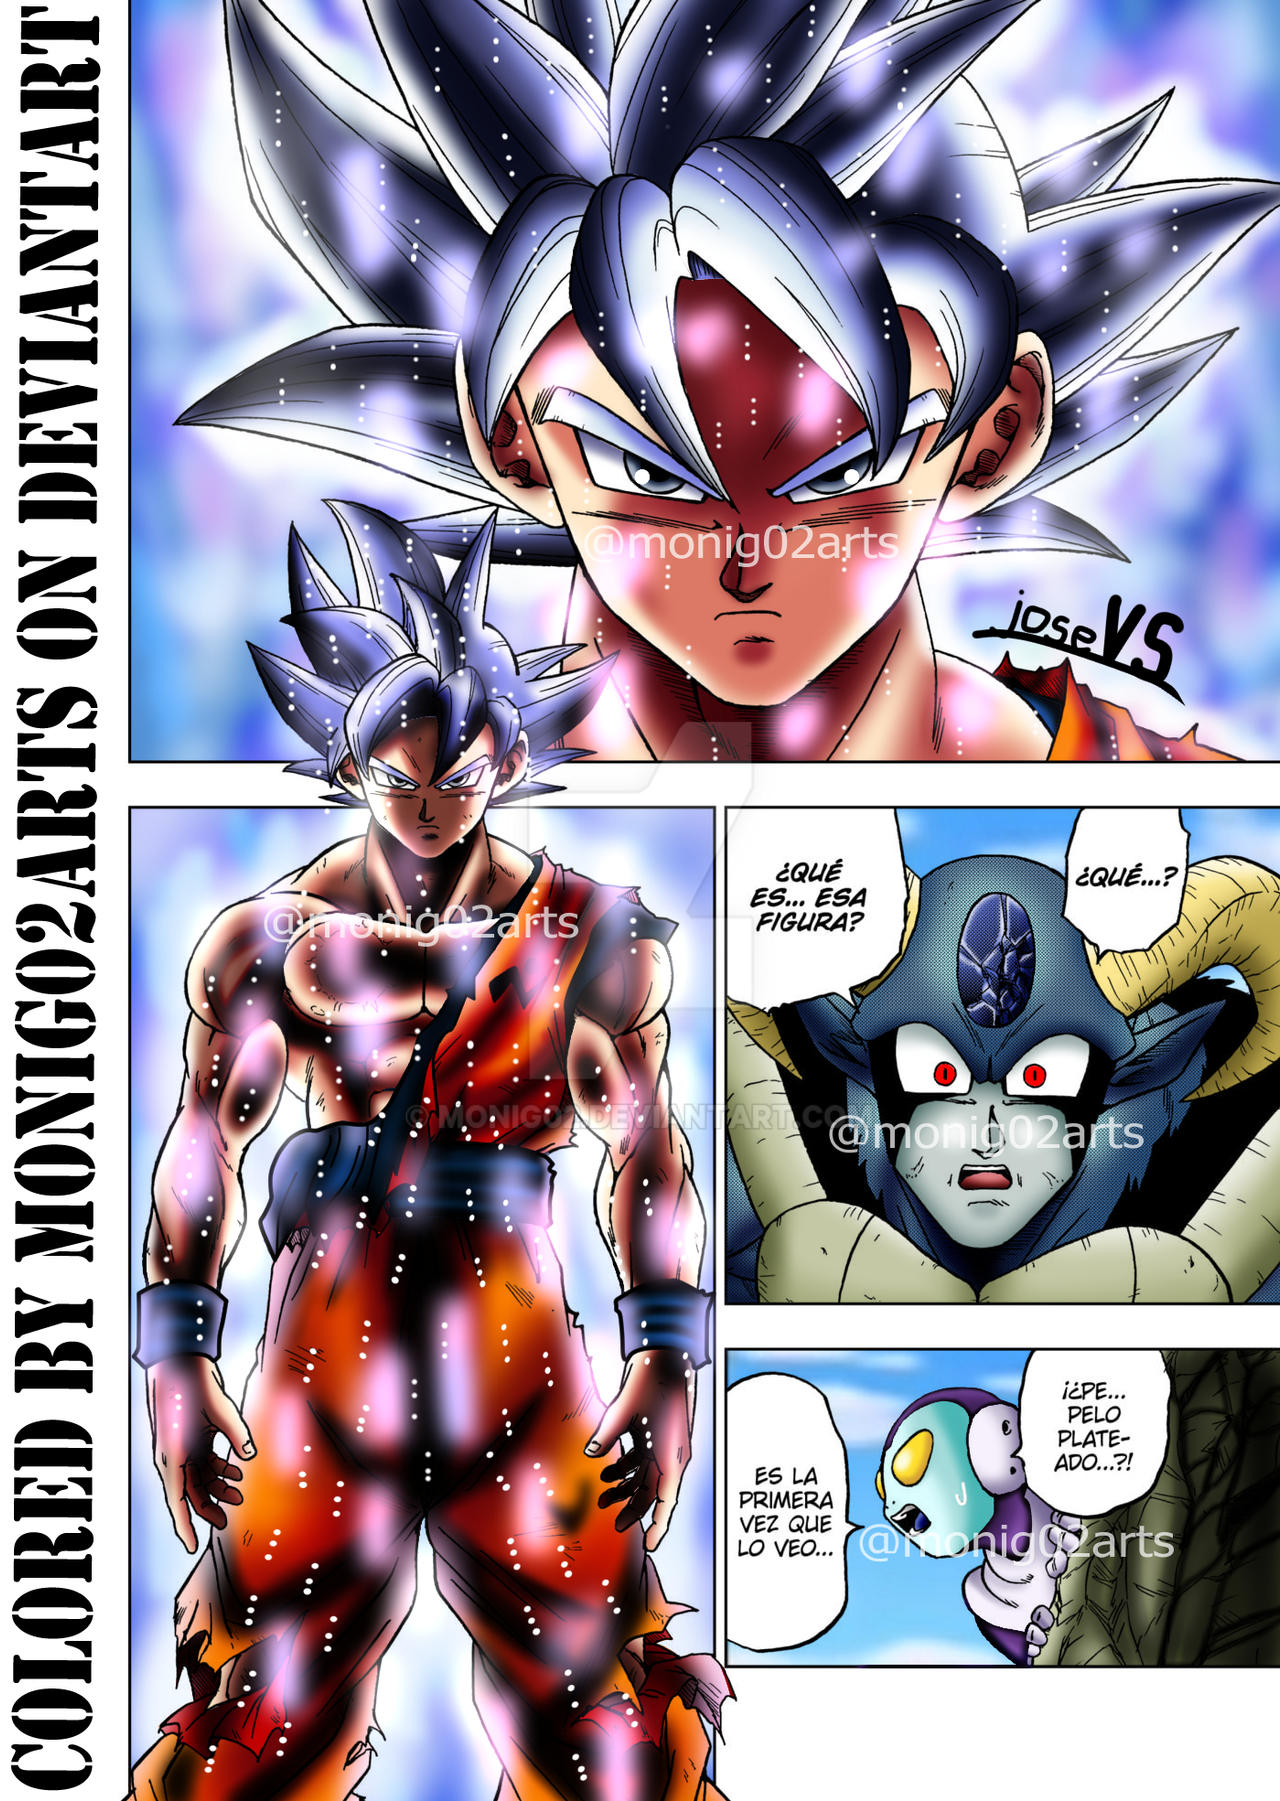 Dragonball Goku Manga Panel #1 by Gatnne on DeviantArt